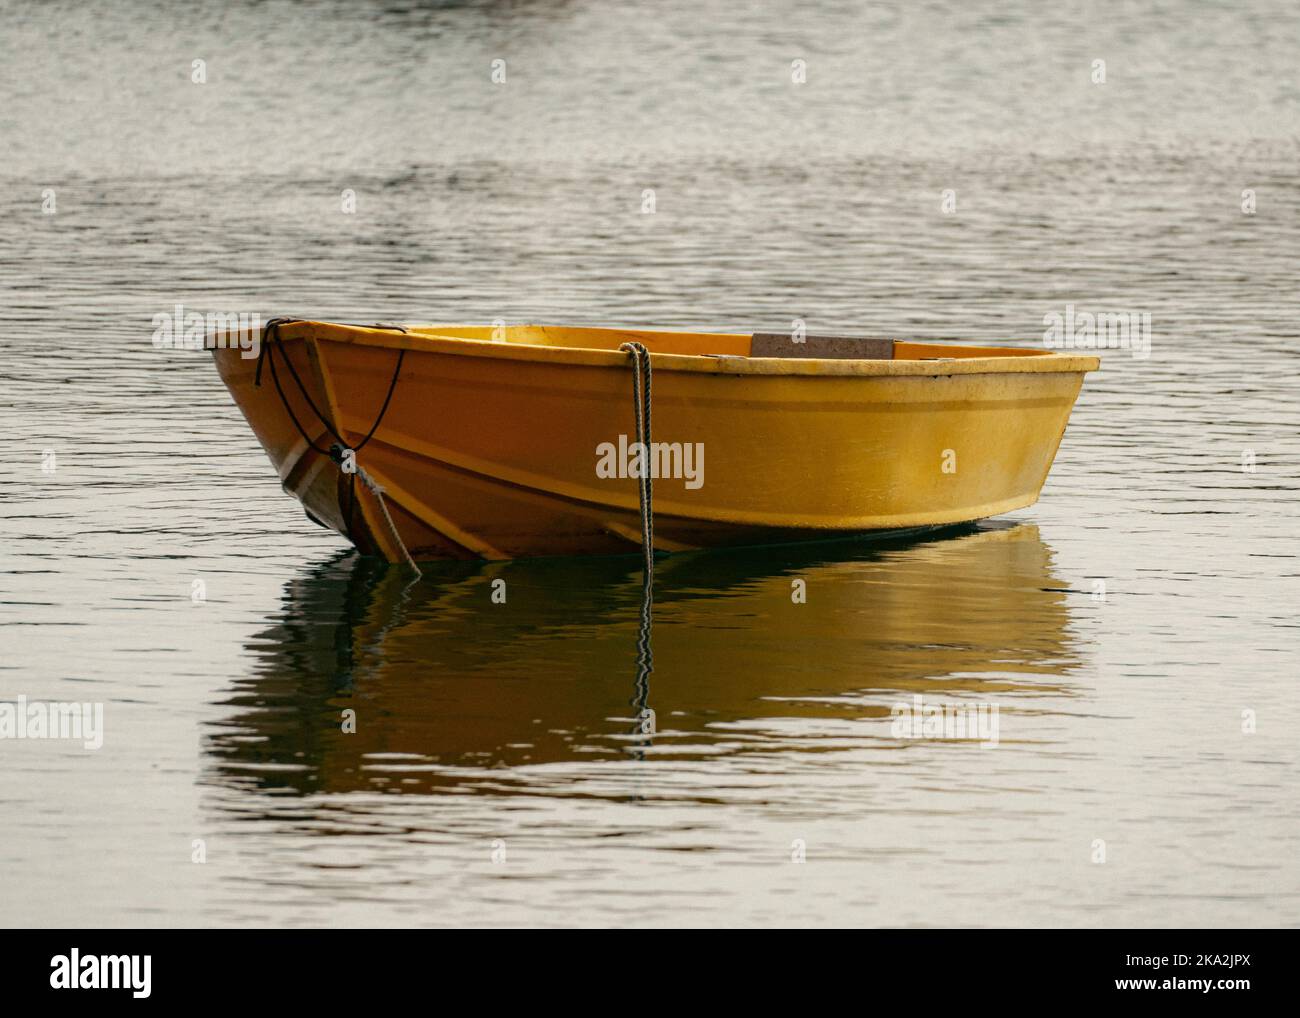 https://c8.alamy.com/comp/2KA2JPX/the-yellow-single-fishing-boat-in-the-pond-close-up-2KA2JPX.jpg